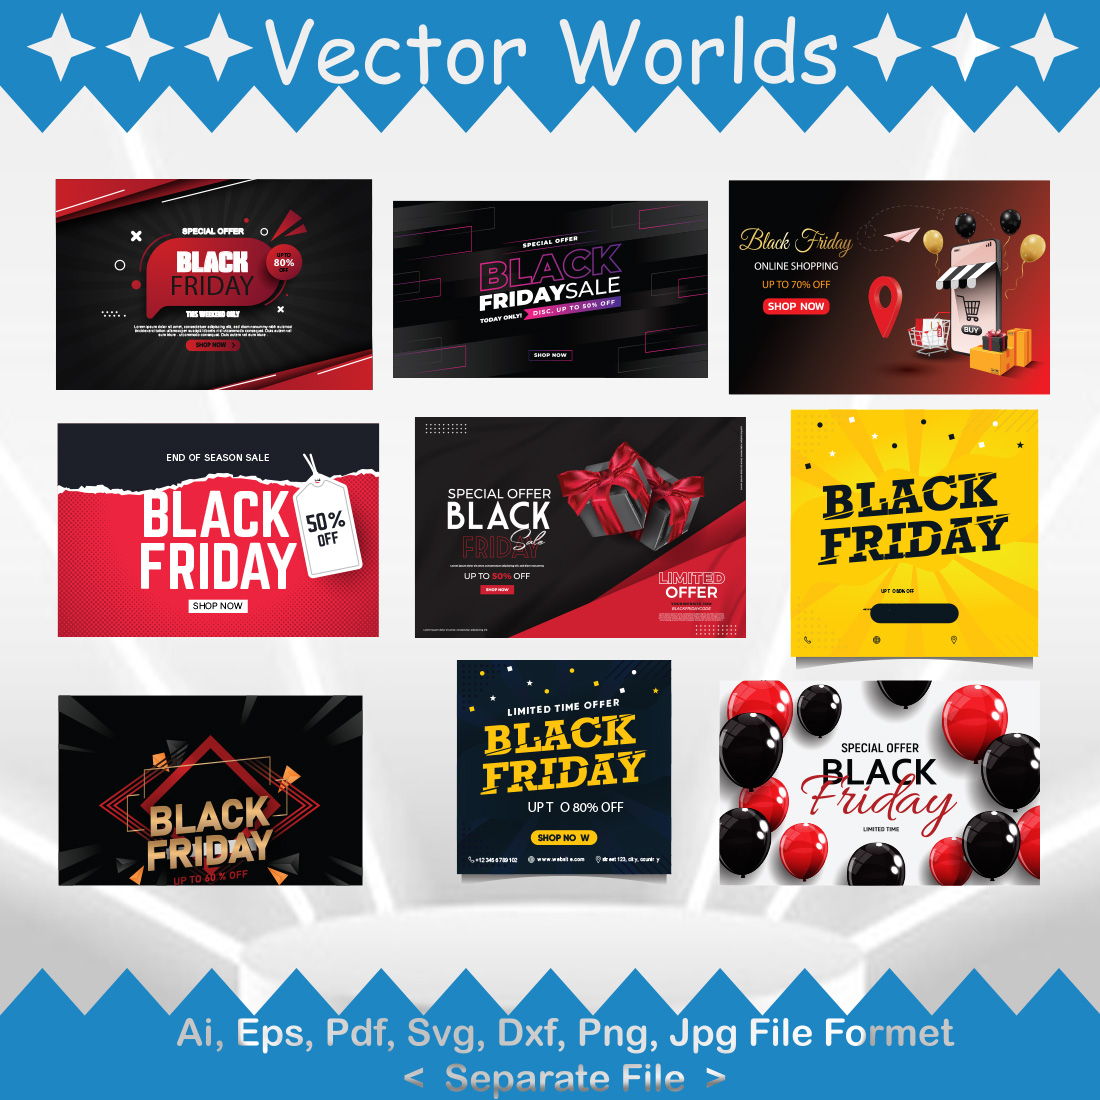 Black Friday SVG Vector Design preview image.